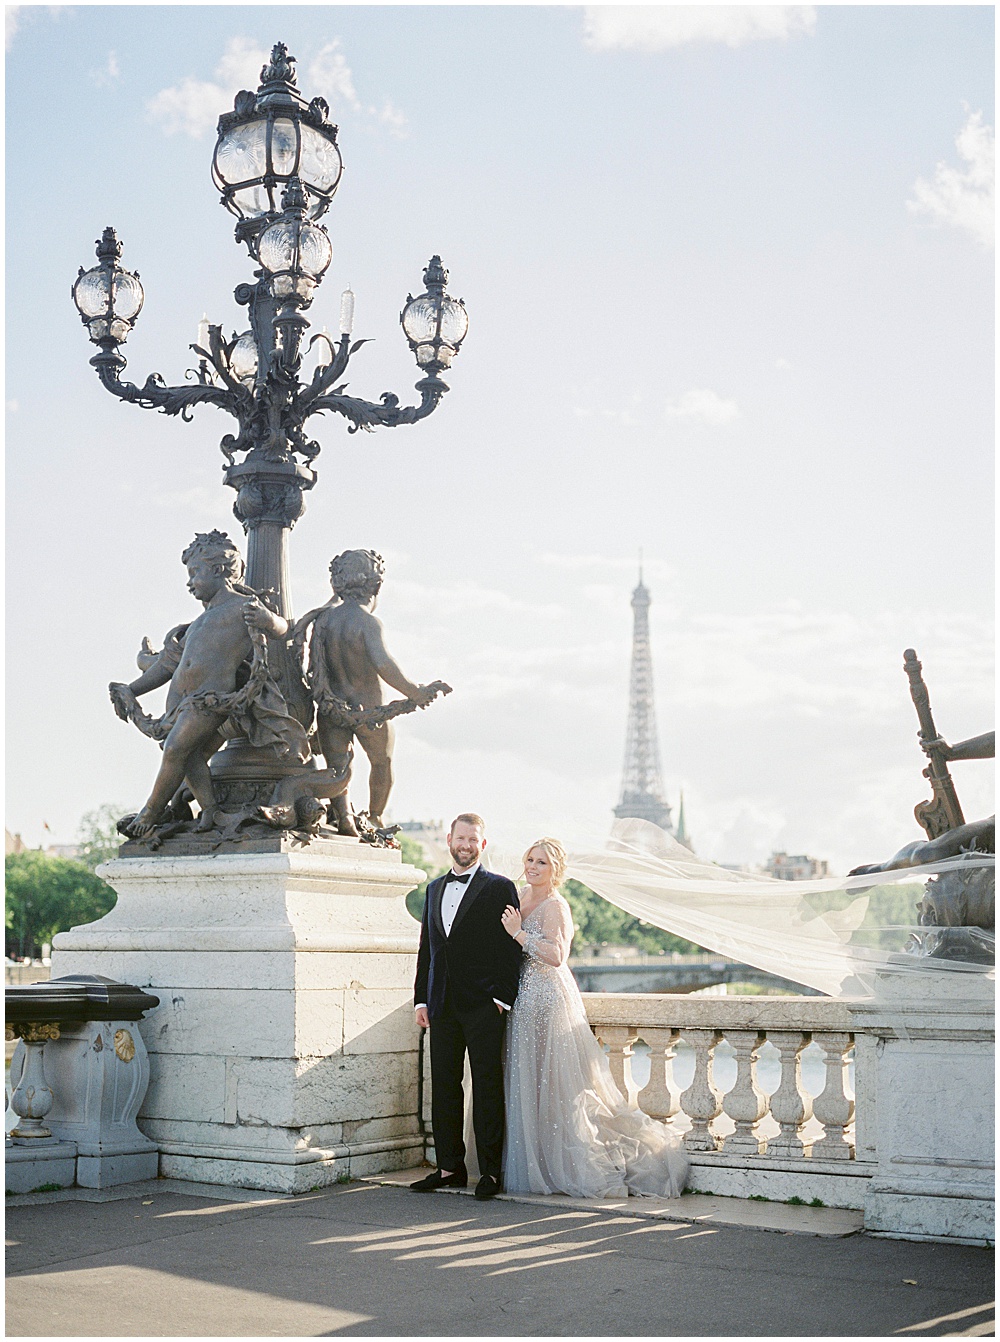 Pont Alexandre iii Wedding, Ritz paris wedding, The Ritz, Ritz wedding, Ritz luxury wedding, Marry me at the Ritz Paris, Paris wedding photography, Paris wedding Photographer